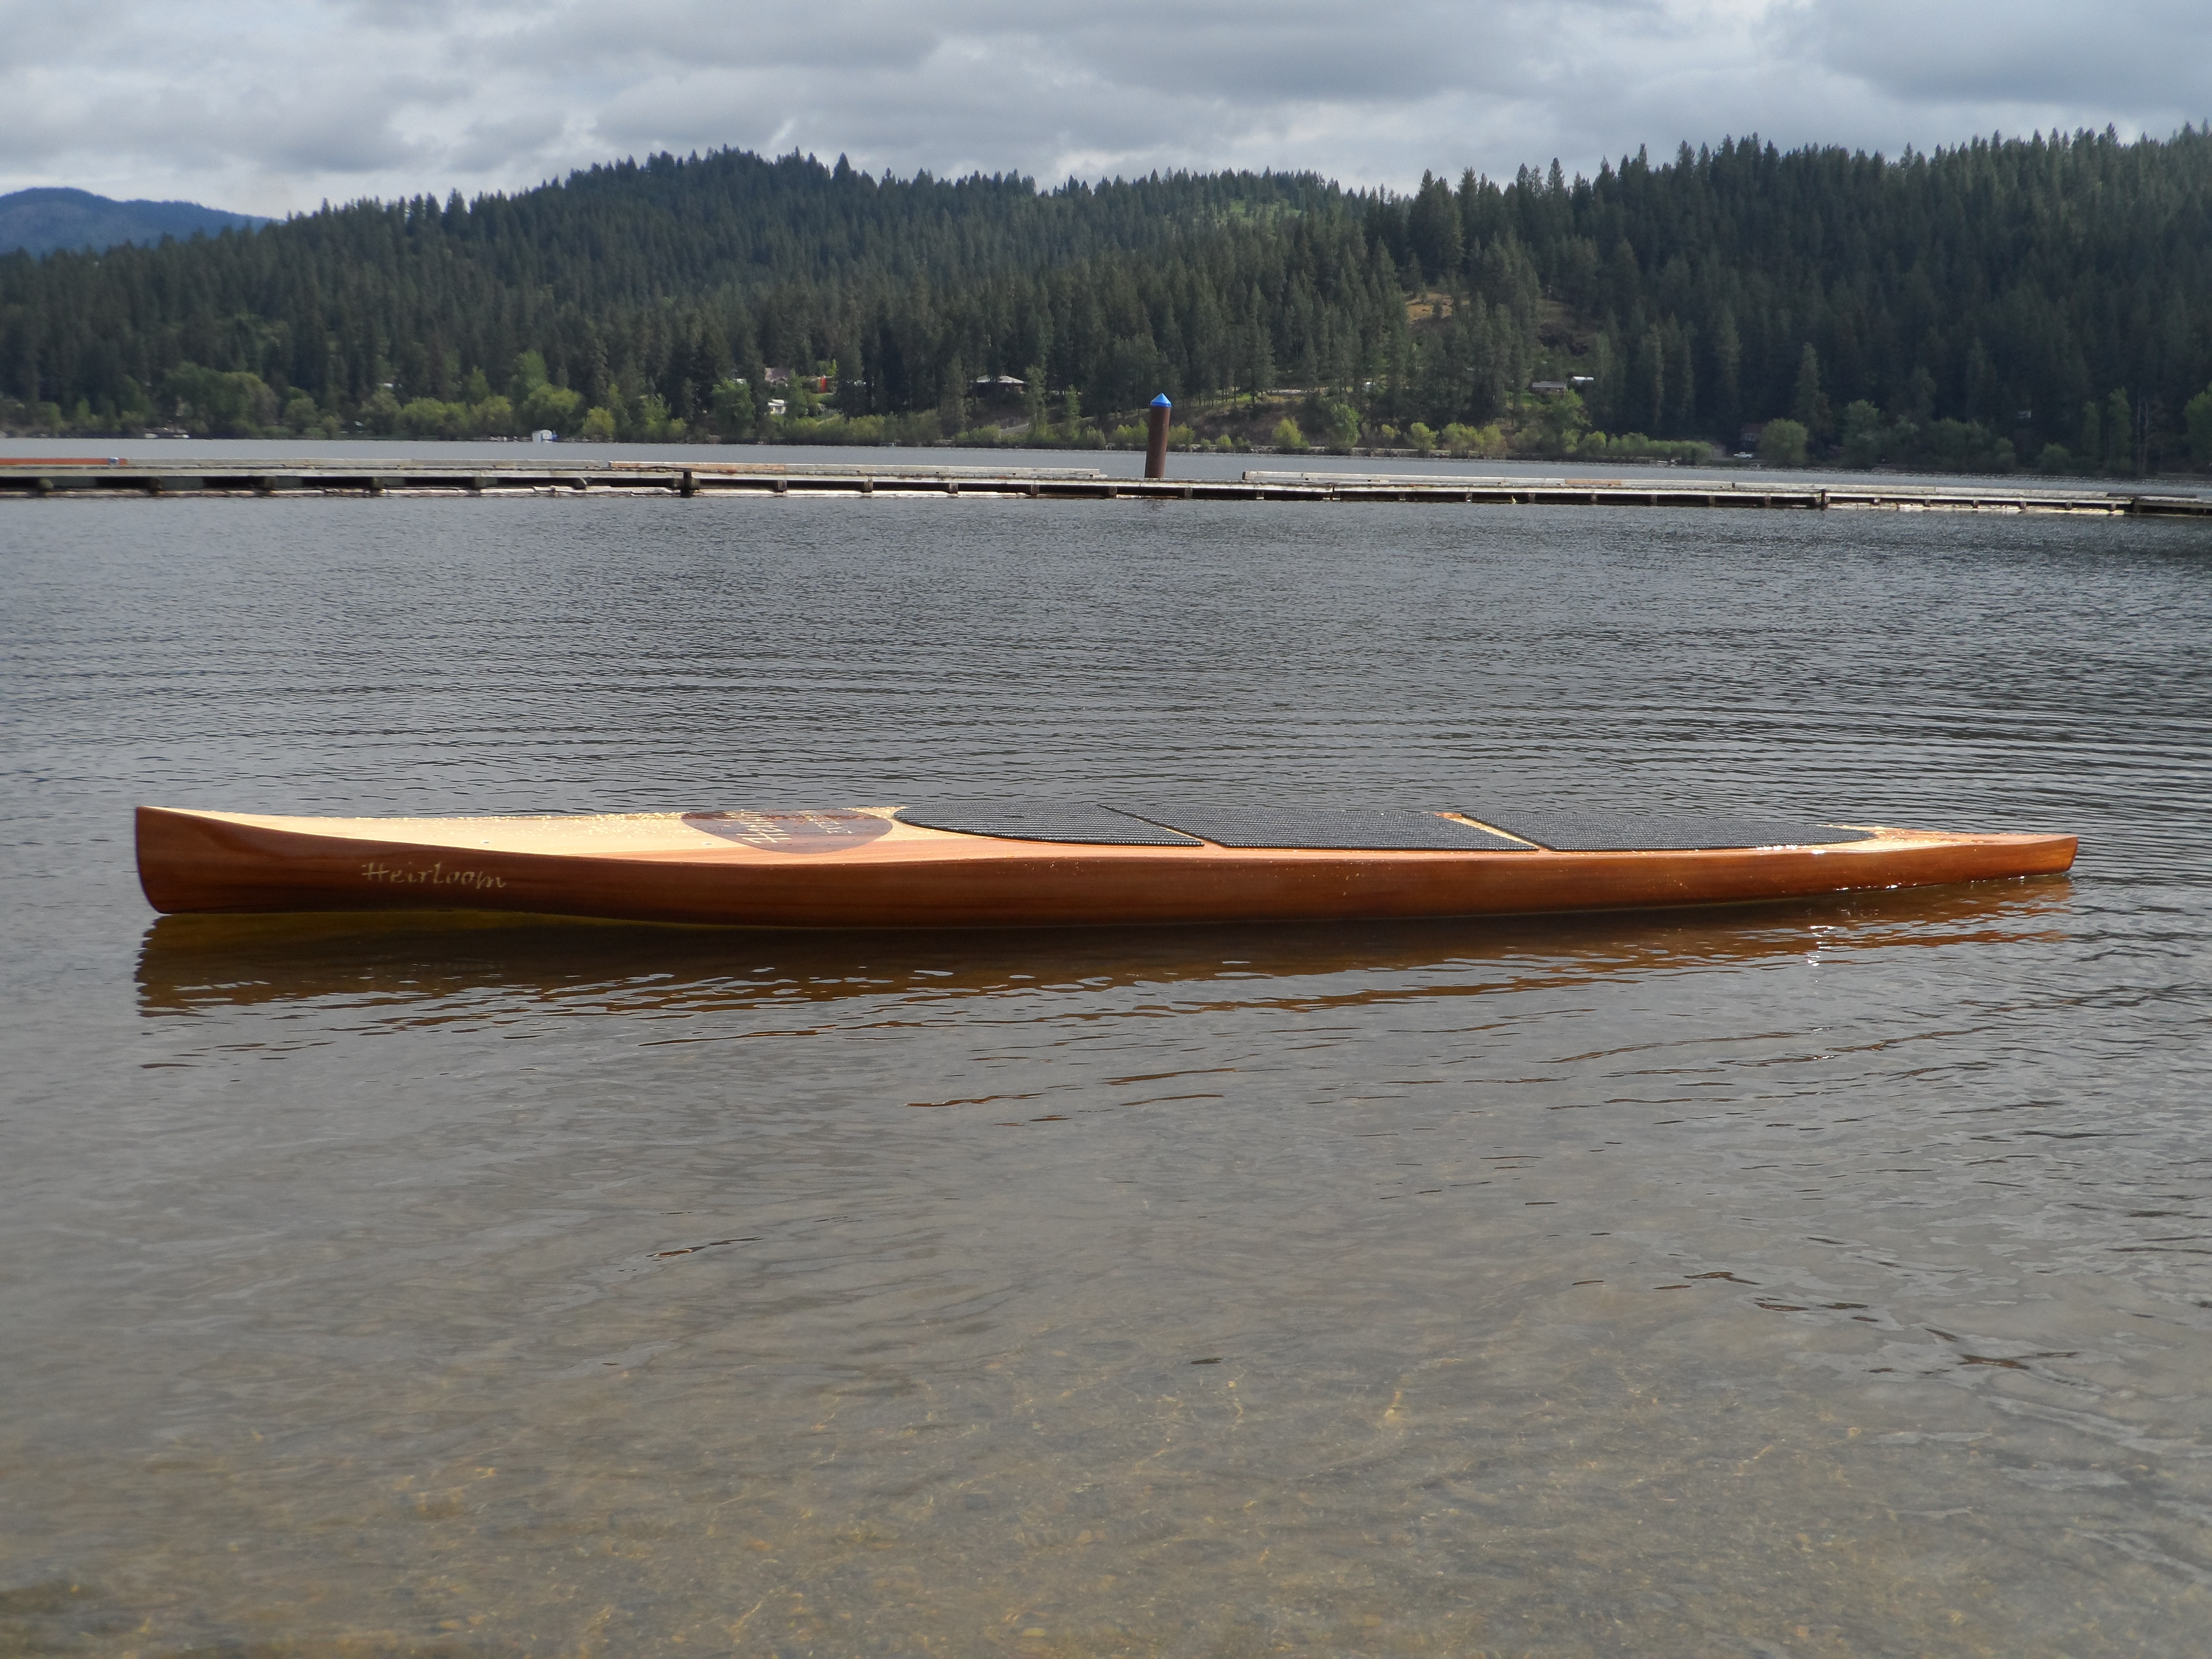  Boat Plans ~ Boat Plans At Residence kayak plans, Variations Among